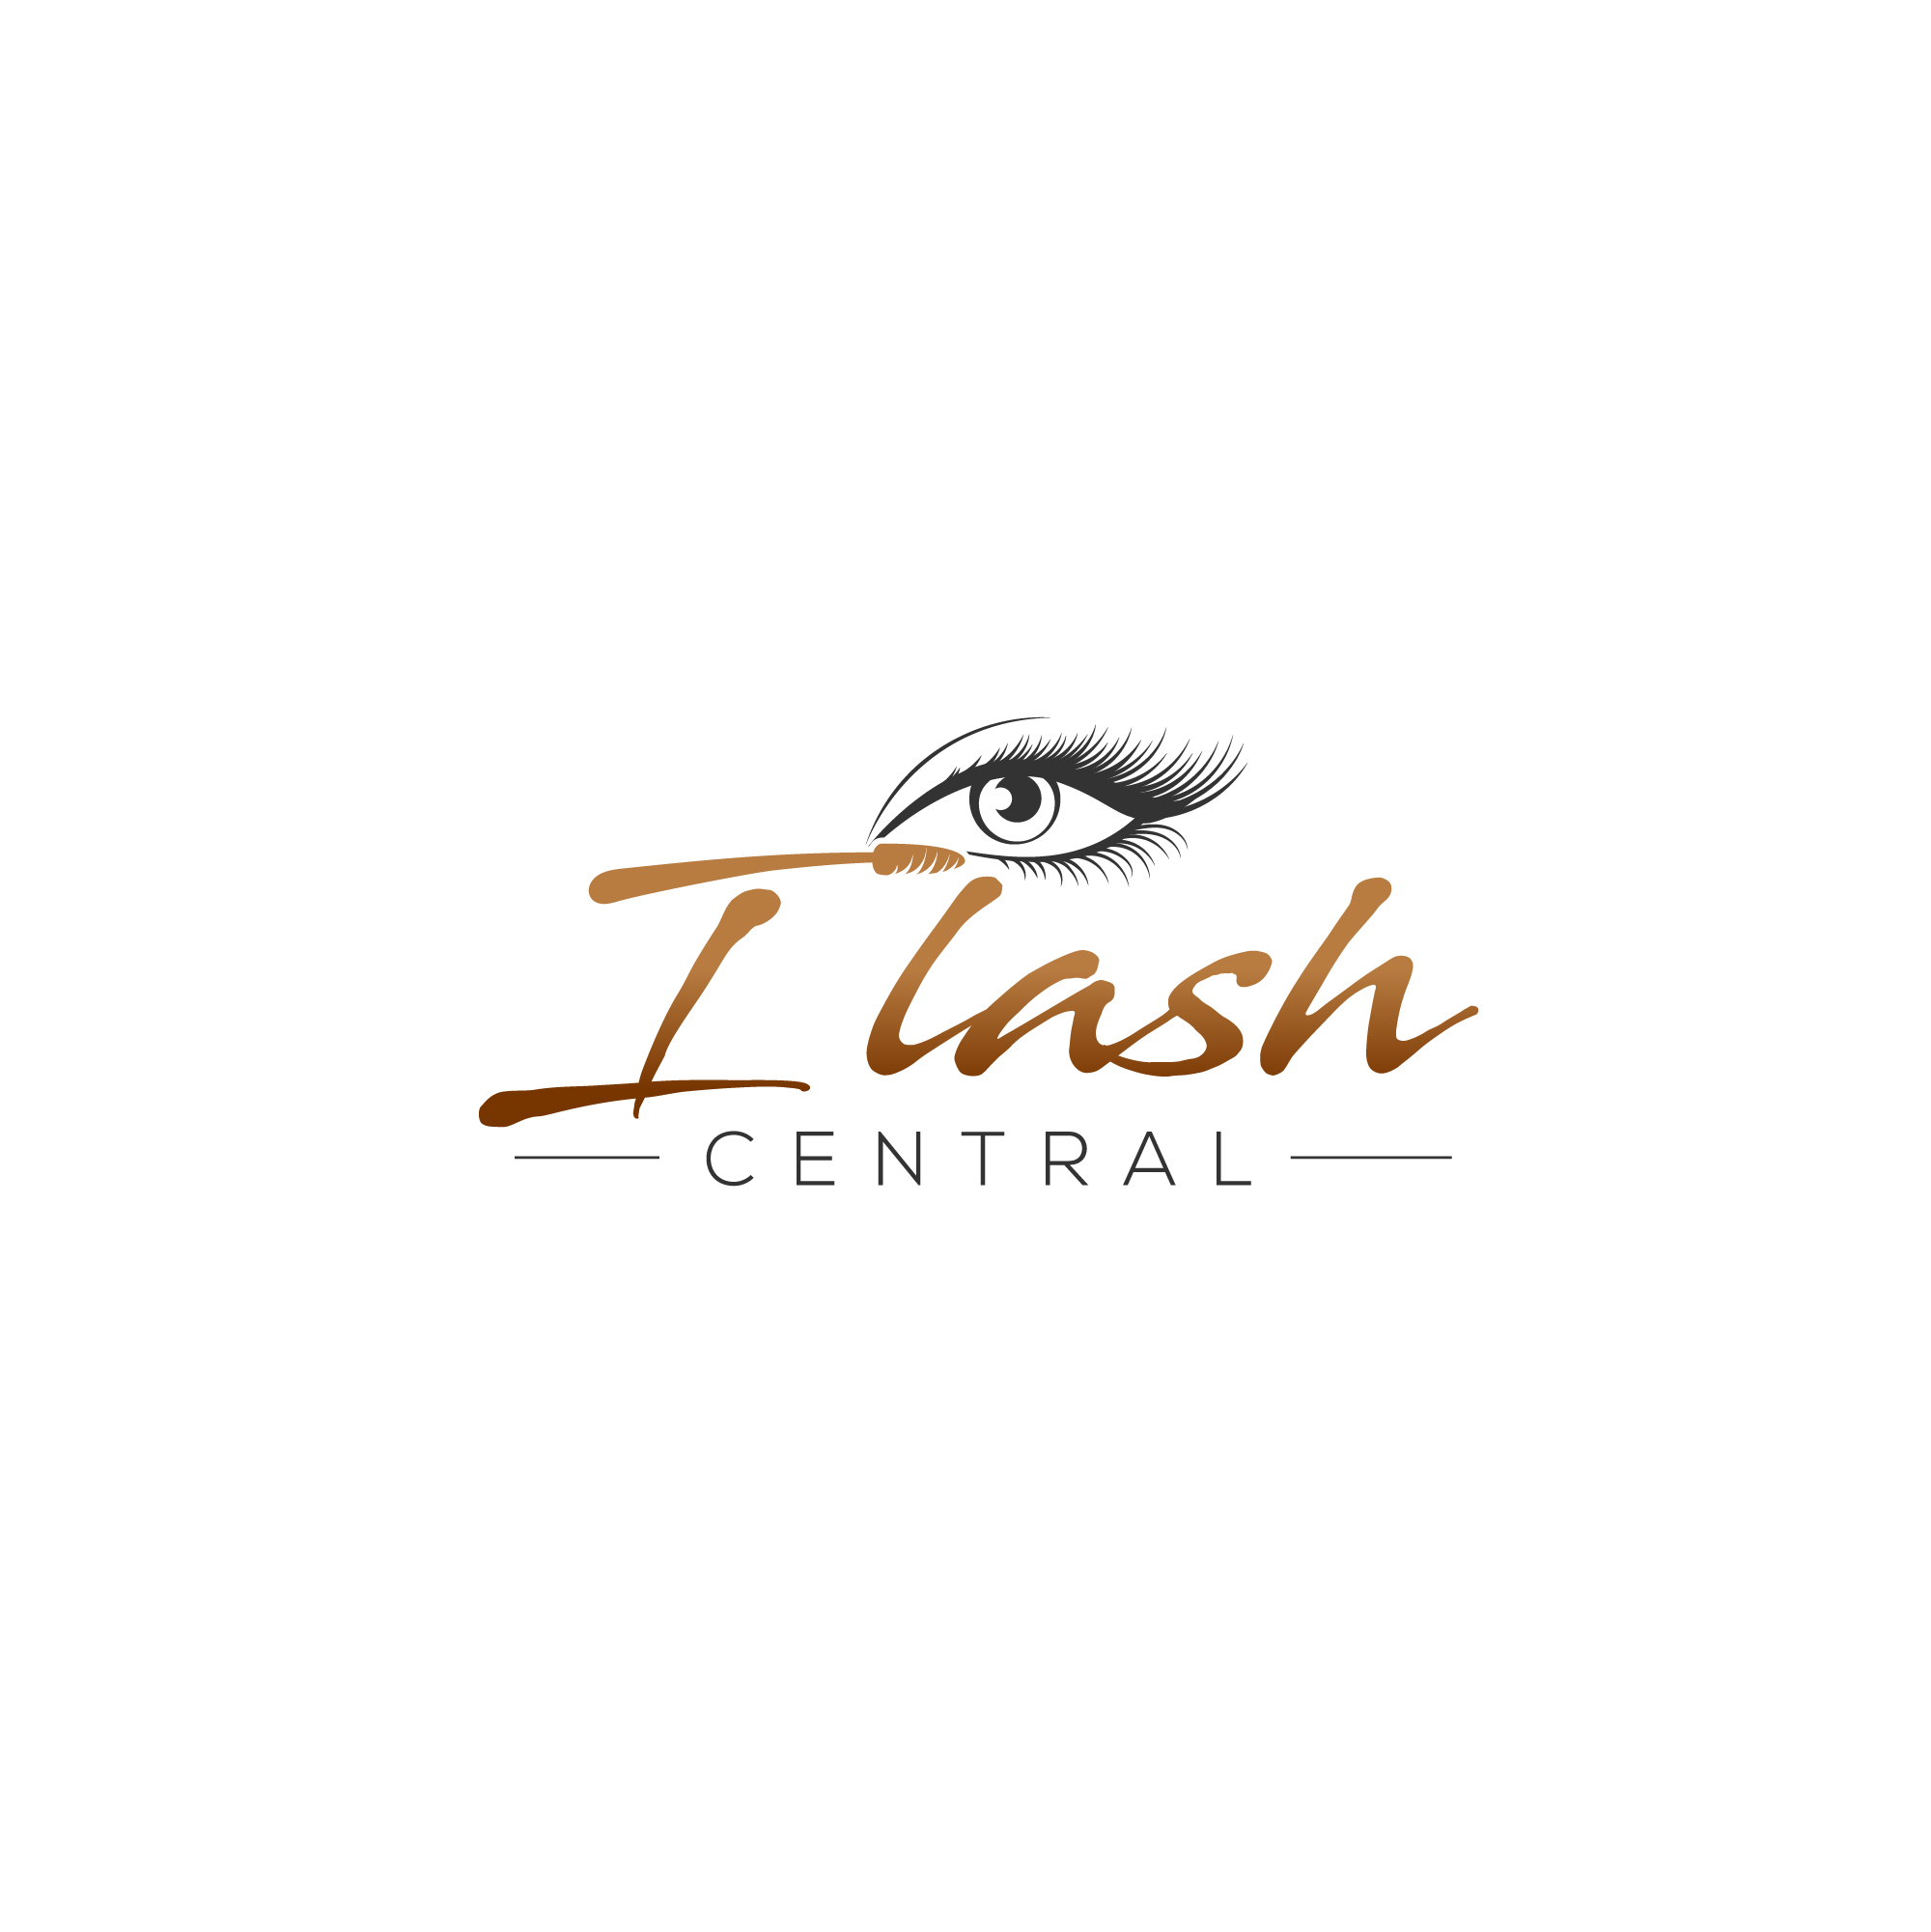 Text based Logo Designs for I Lash central